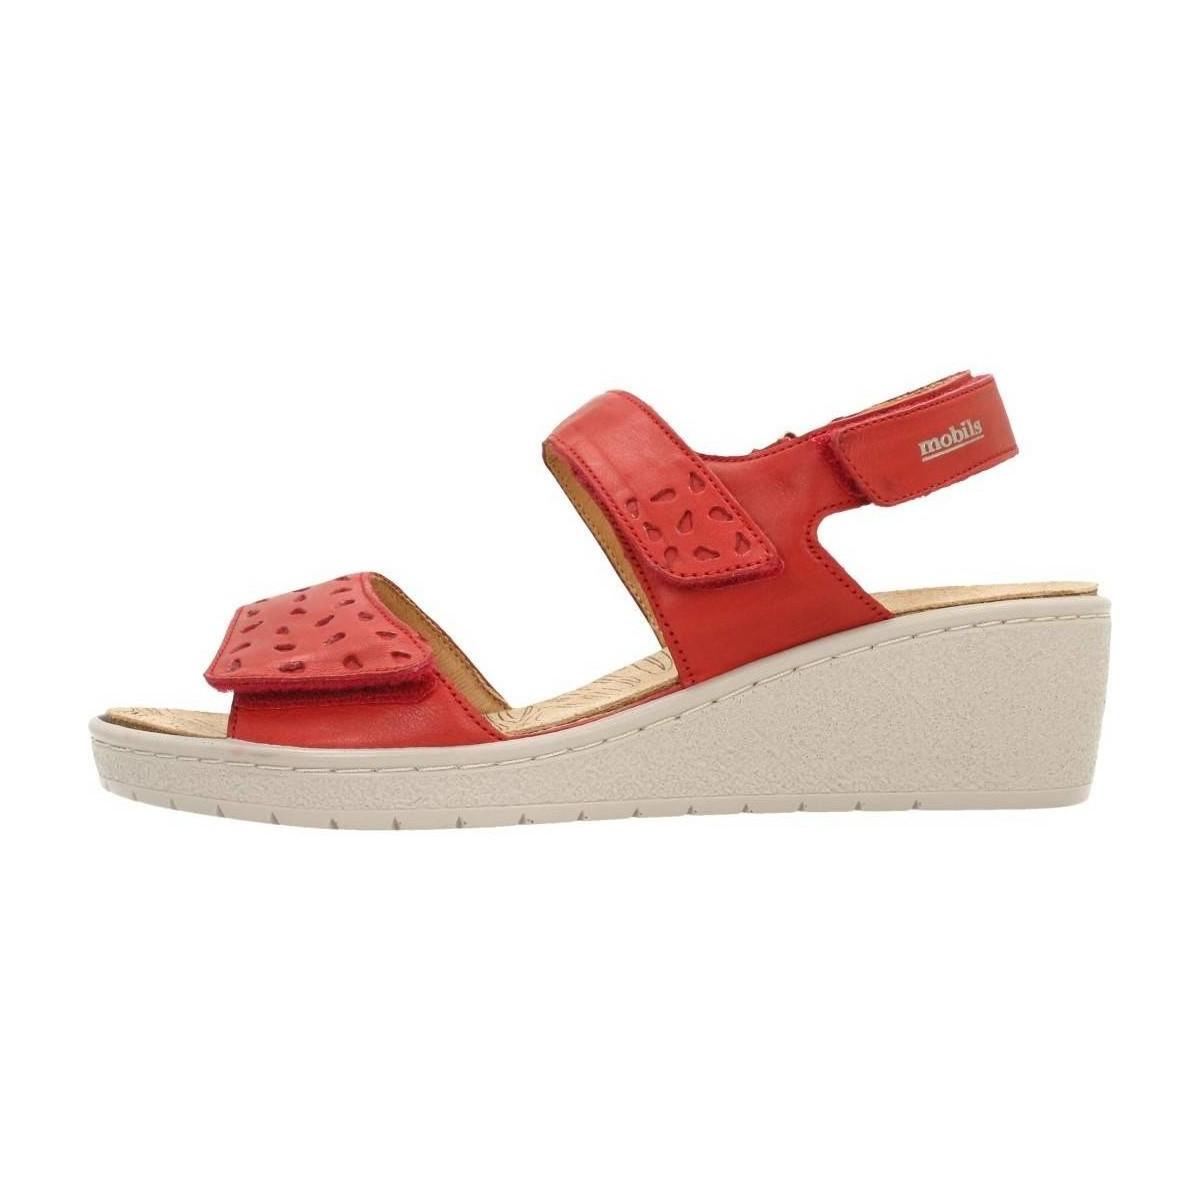 mephisto red sandals